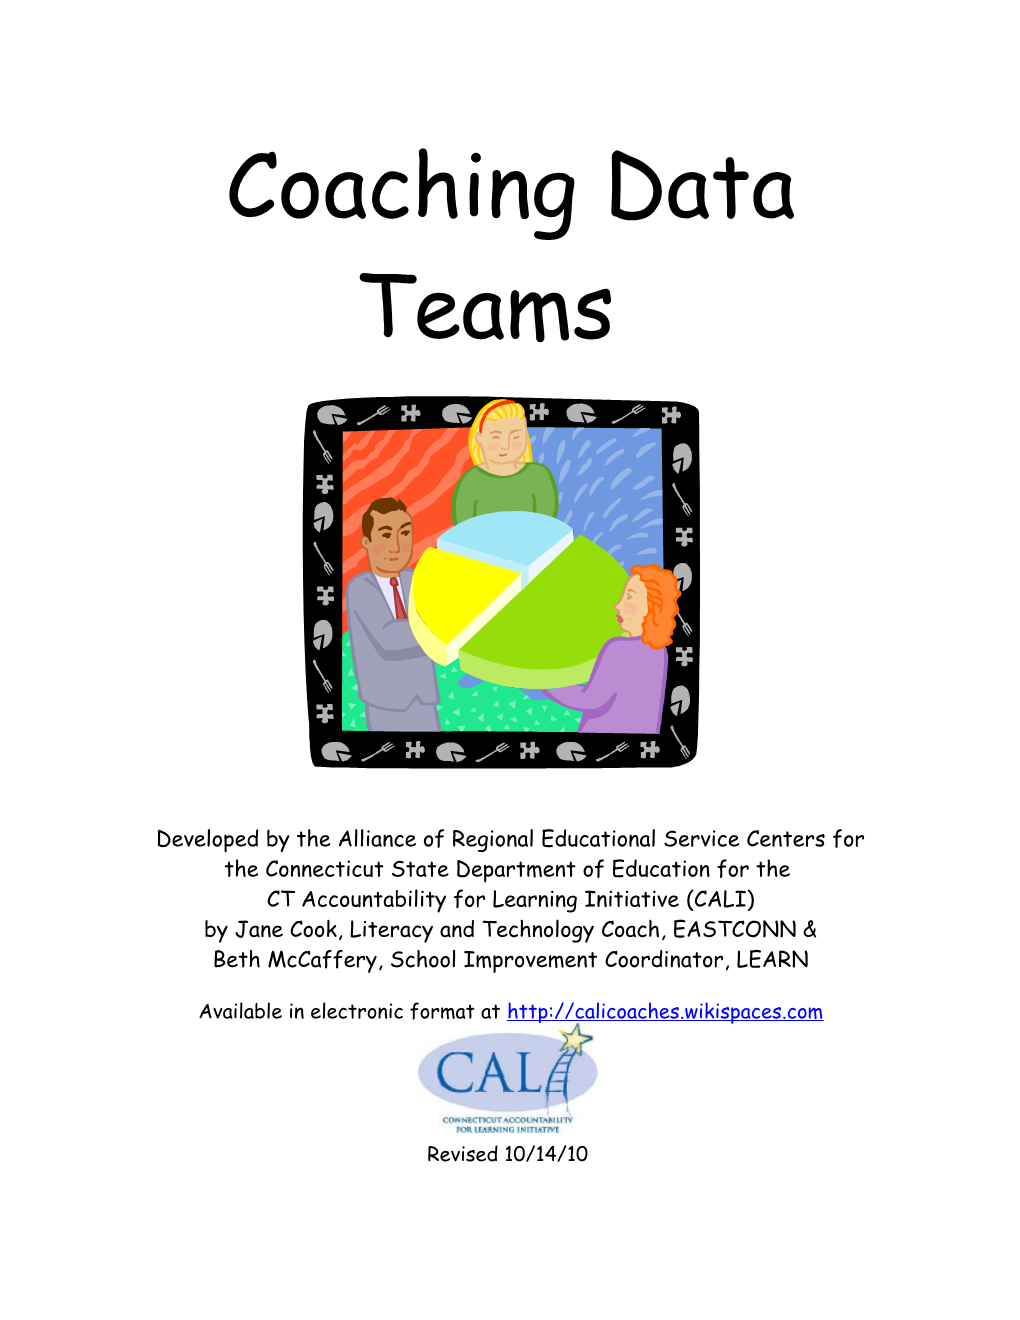 Coaching Data Teams